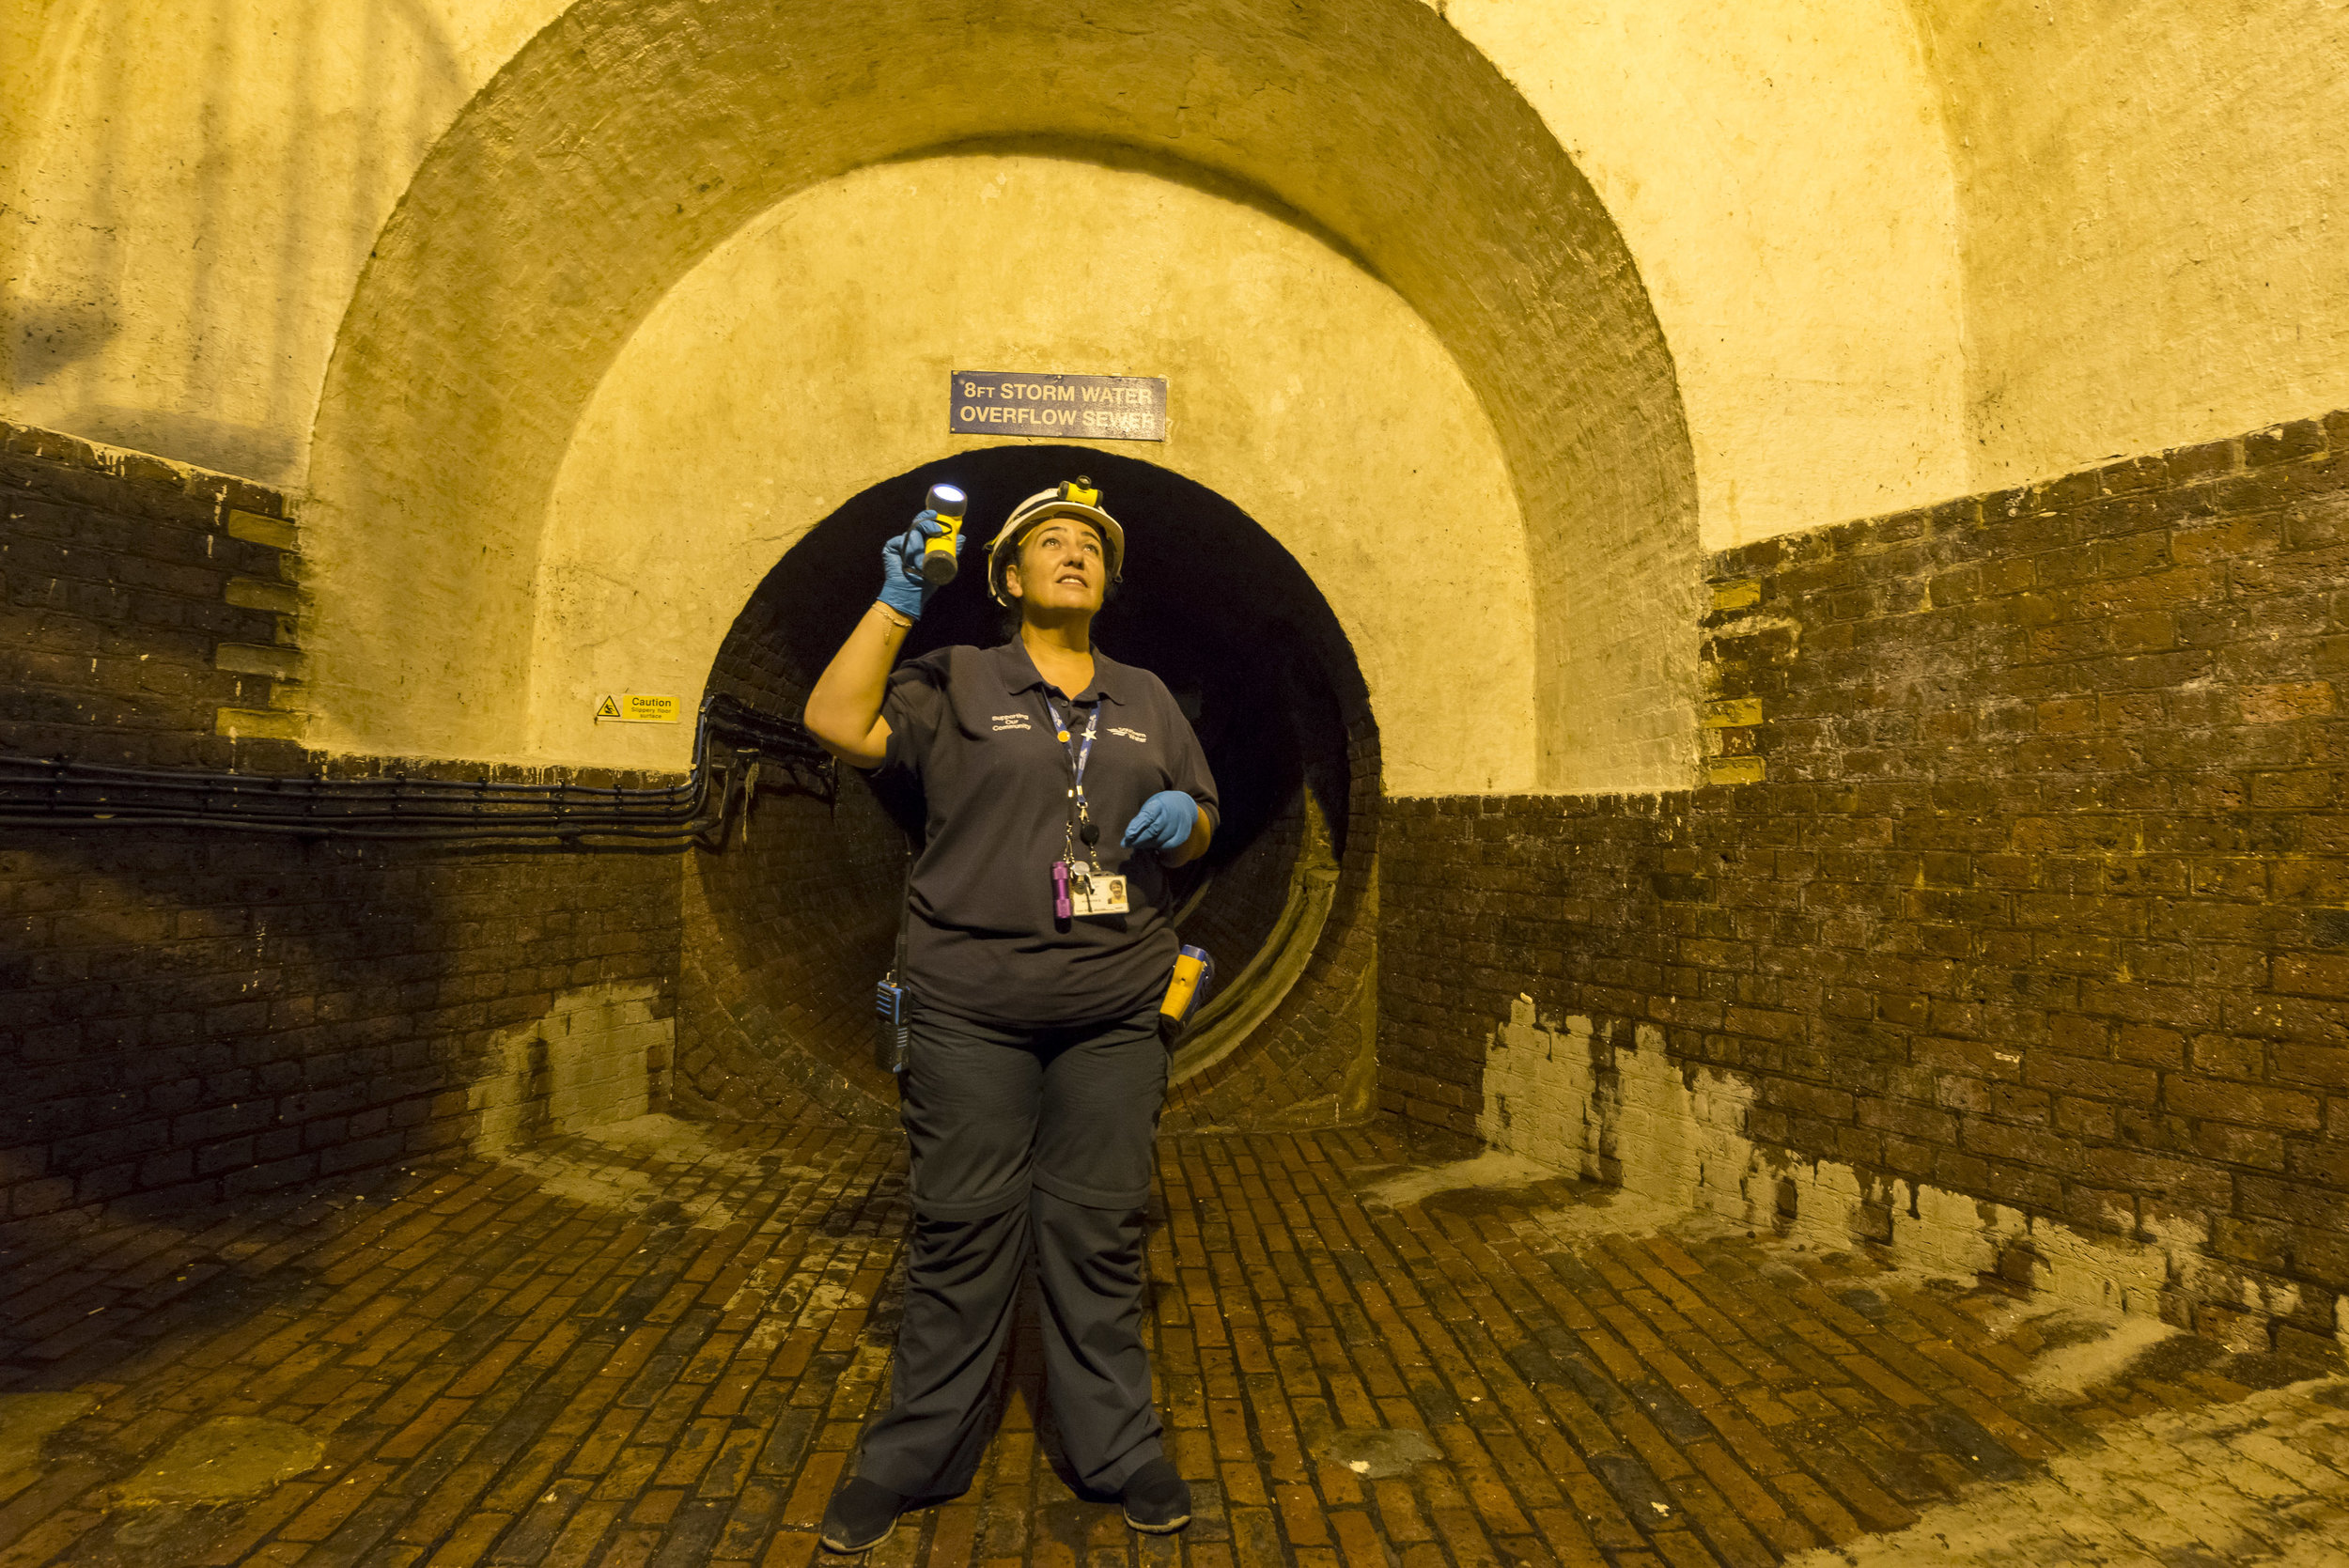 tour of brighton sewers